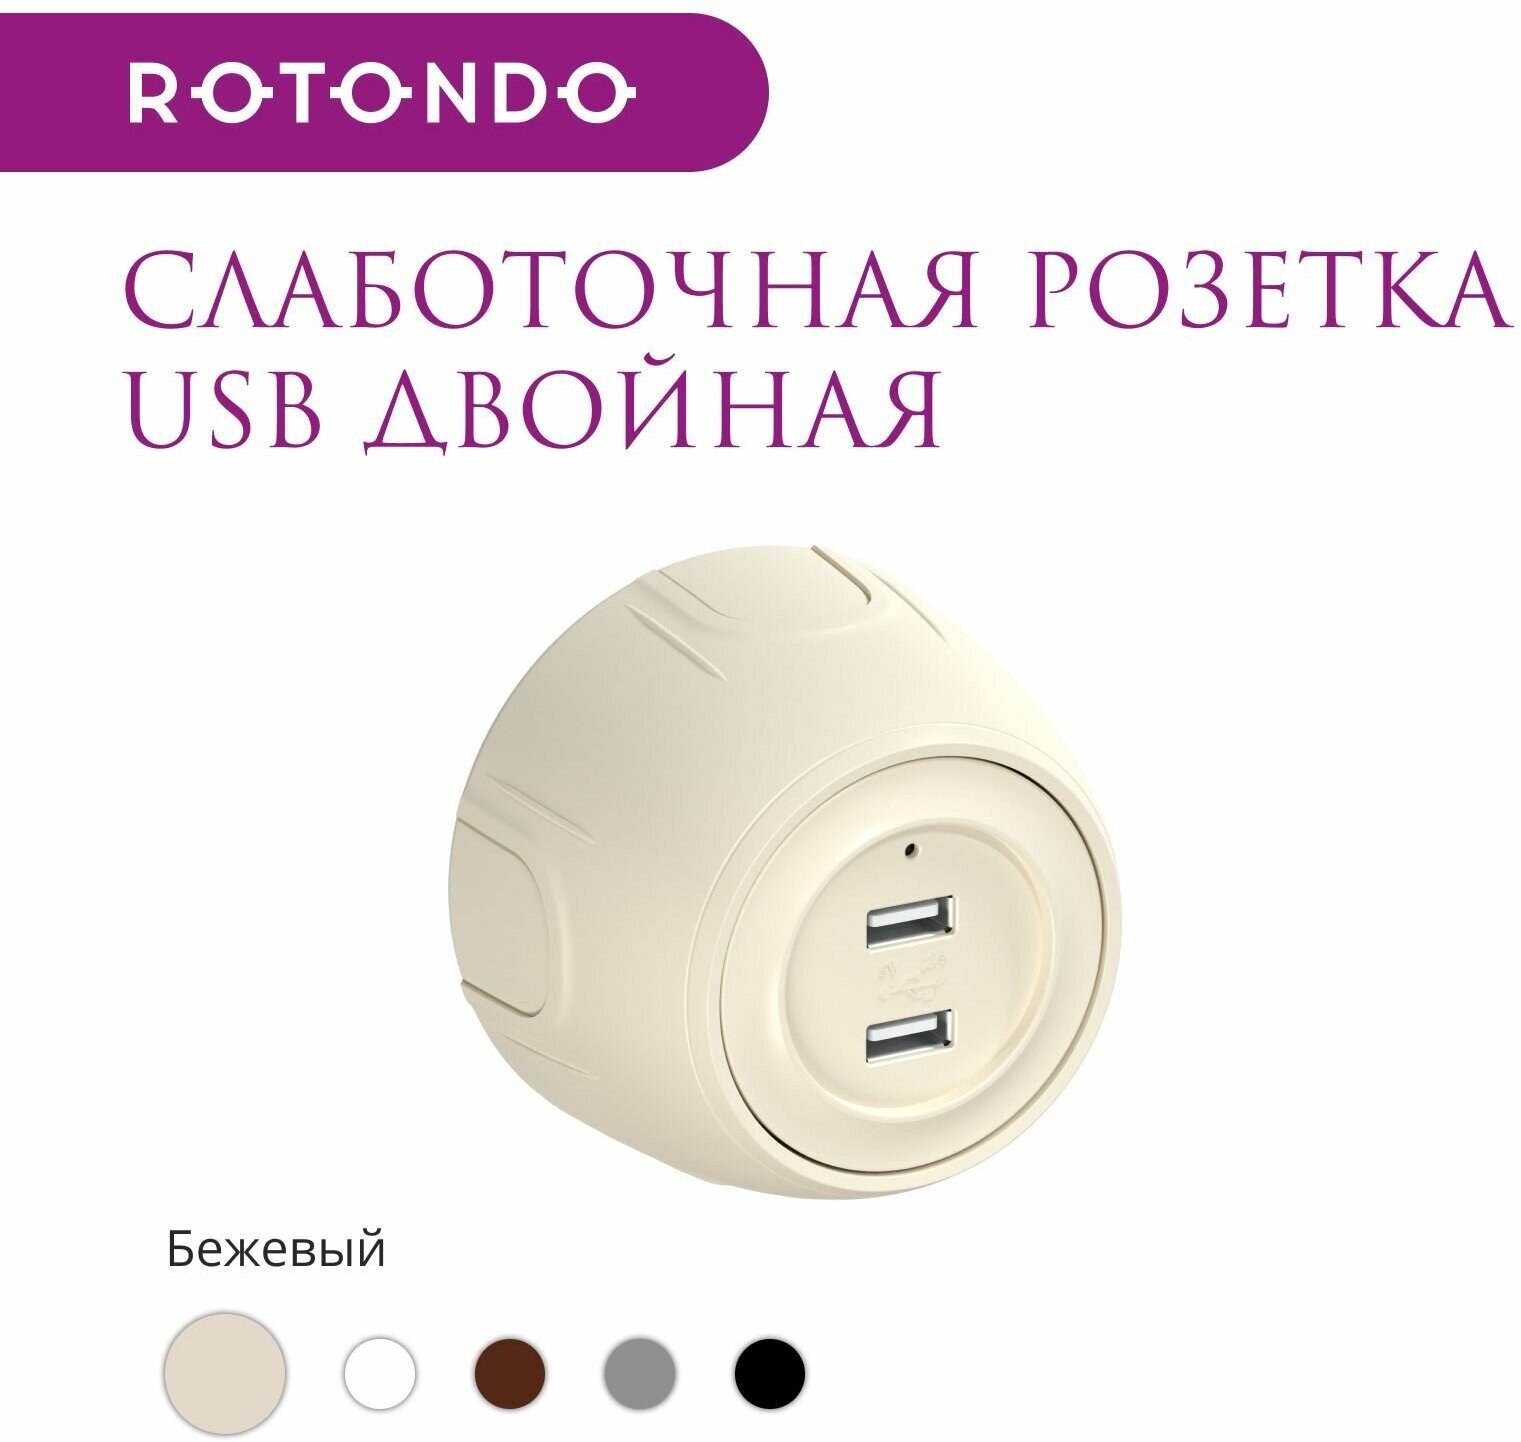 Накладная розетка (наружная) USB двойная Rotondo (OneKeyElectro), с подсветкой, цвет бежевый. - фотография № 2